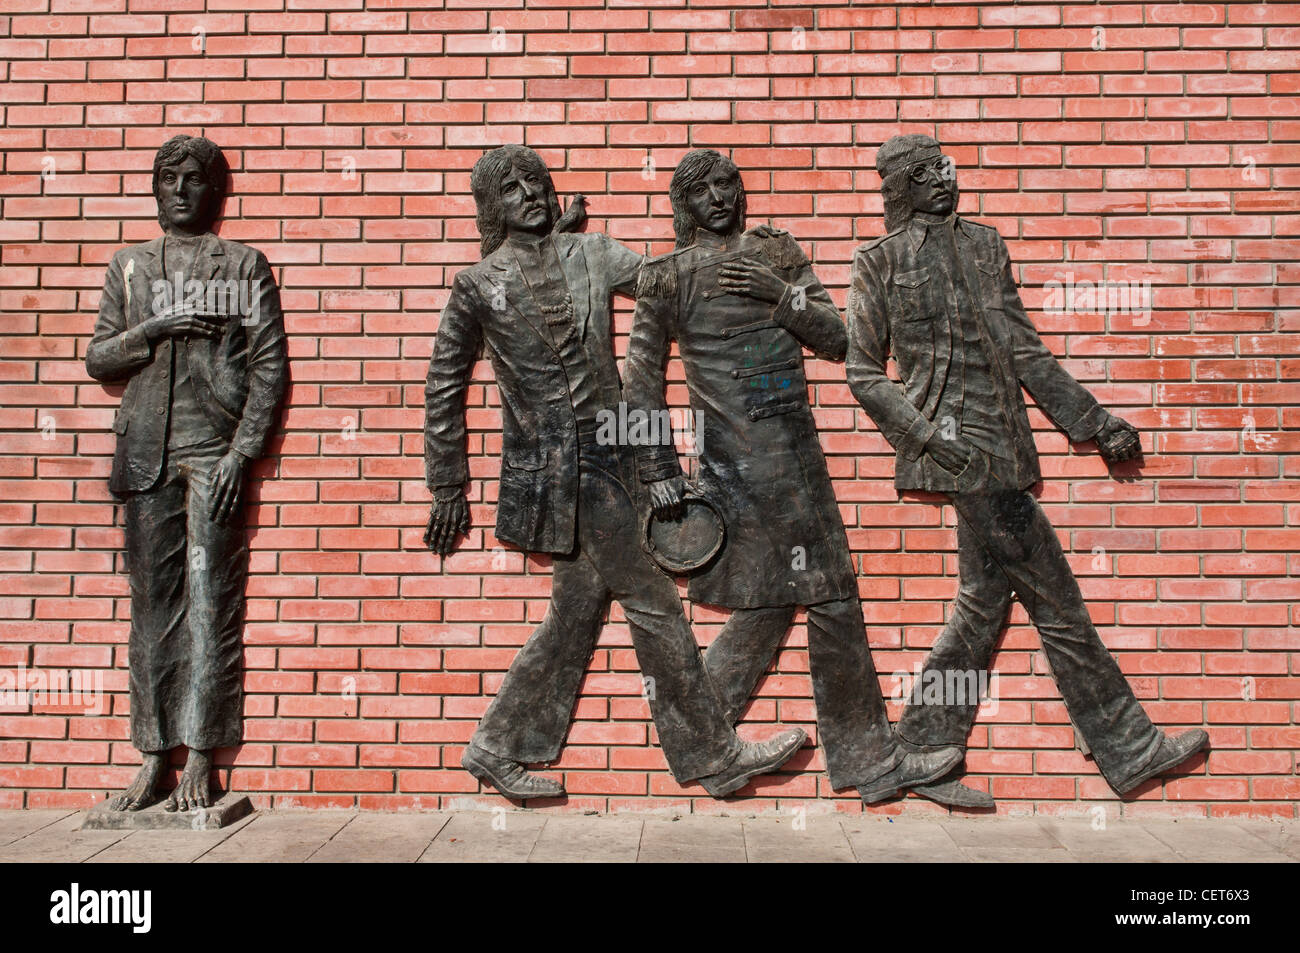 Beatles-Statue in Ulan Bator, Mongolei Stockfoto